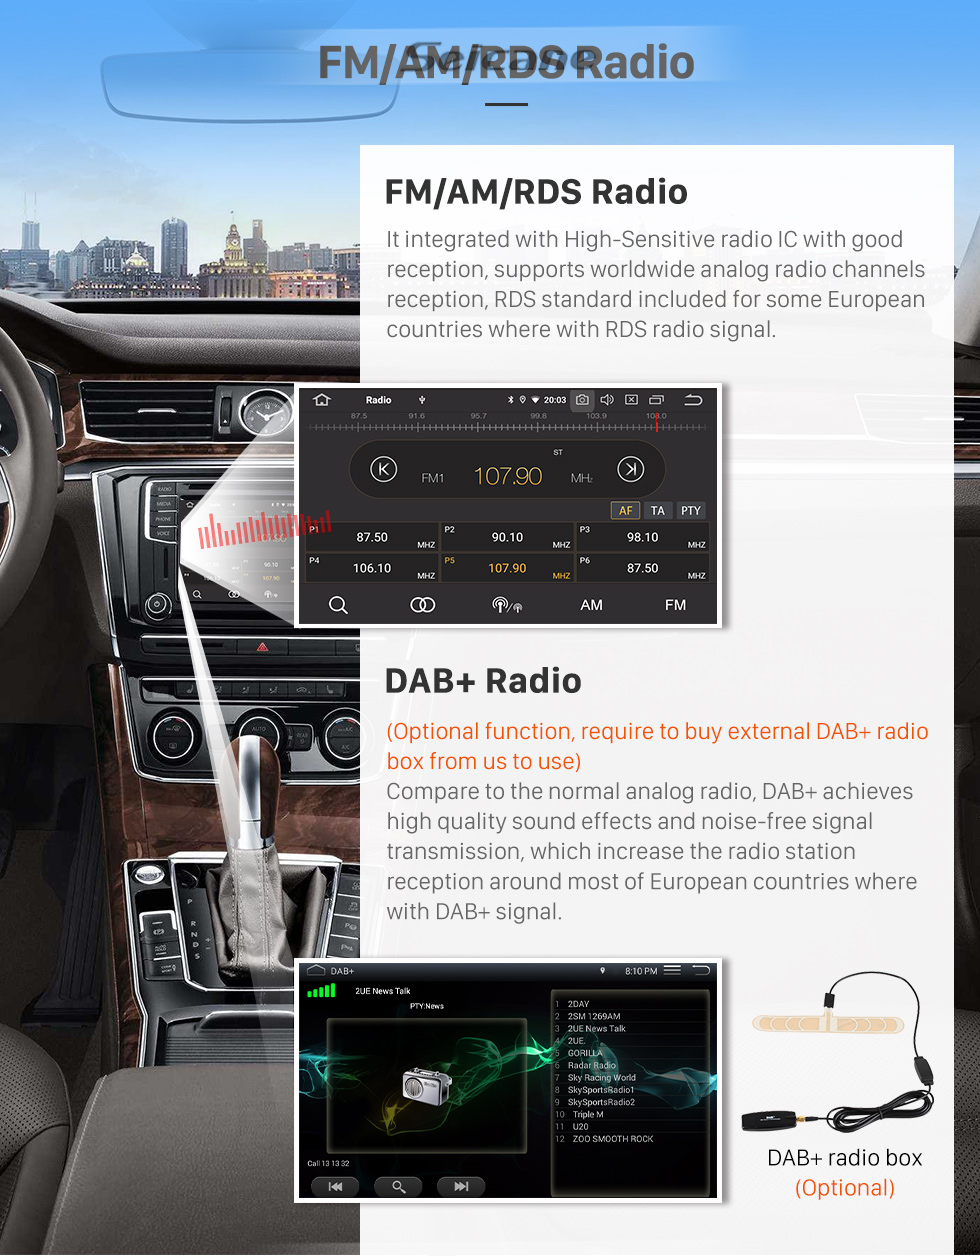 Seicane OEM Android 12.0 para 2013 INFINITI FX35/ FX37 Radio con Bluetooth 9 pulgadas HD Pantalla táctil Sistema de navegación GPS Carplay compatible con DSP